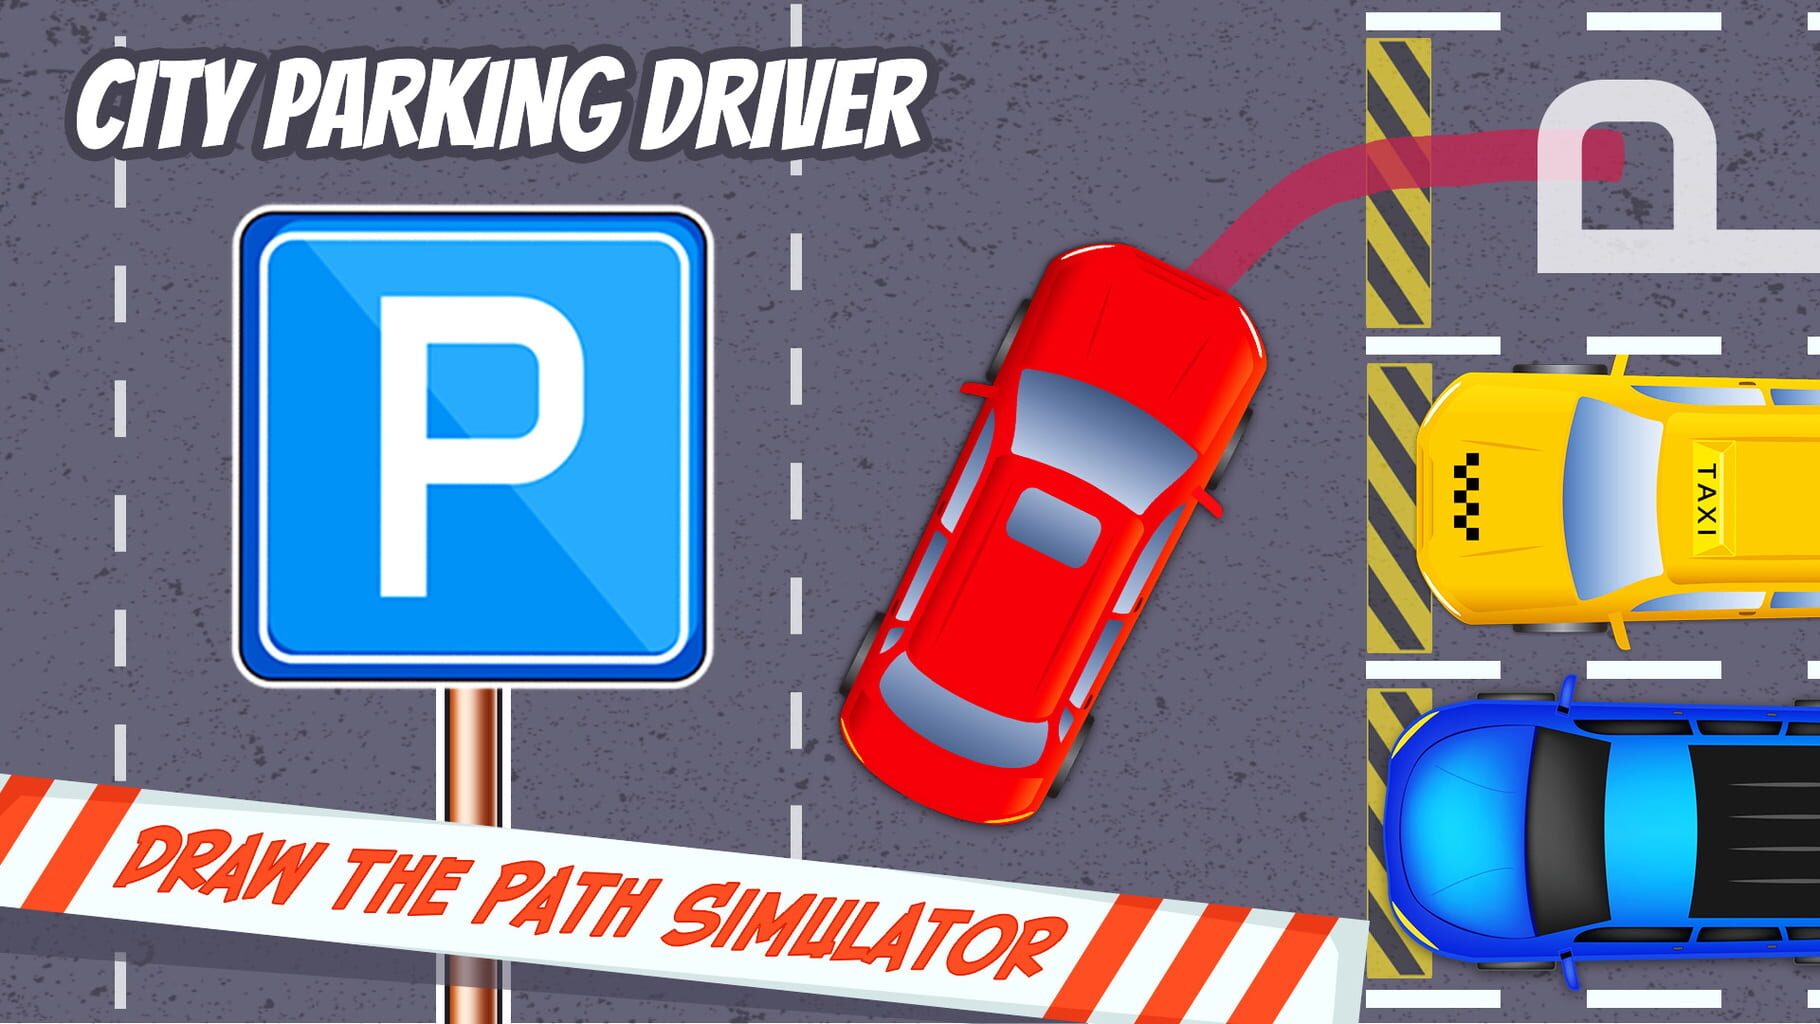 City Parking Driver: Draw The Path Simulator artwork